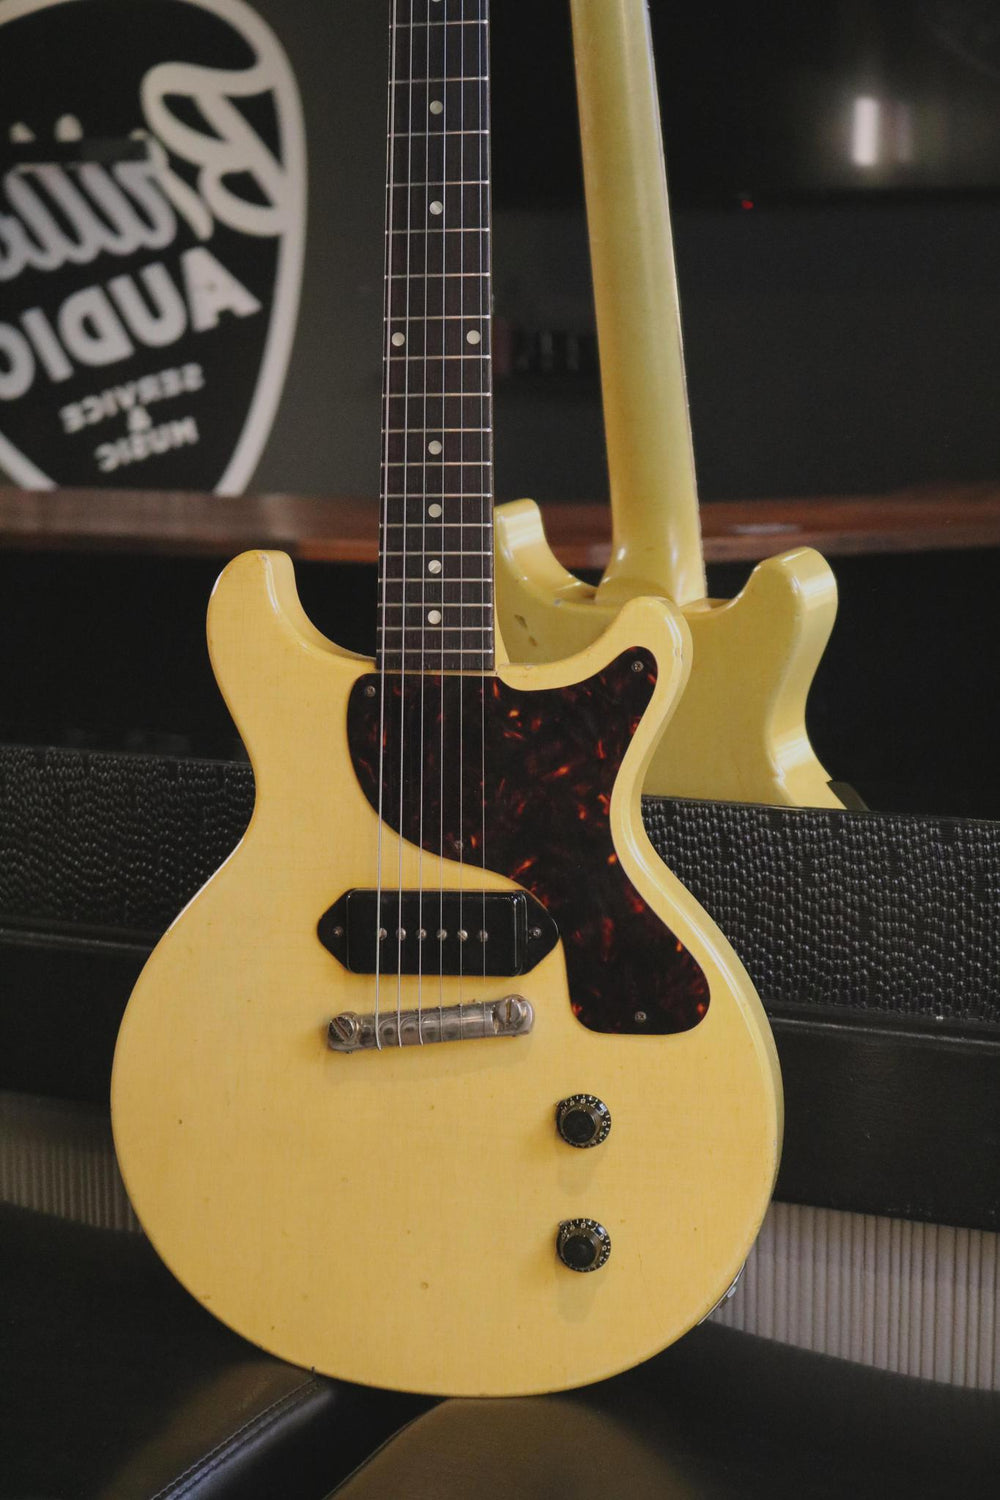 Original 1958 Vintage Gibson Les Paul Jr. "TV Model" - British Audio